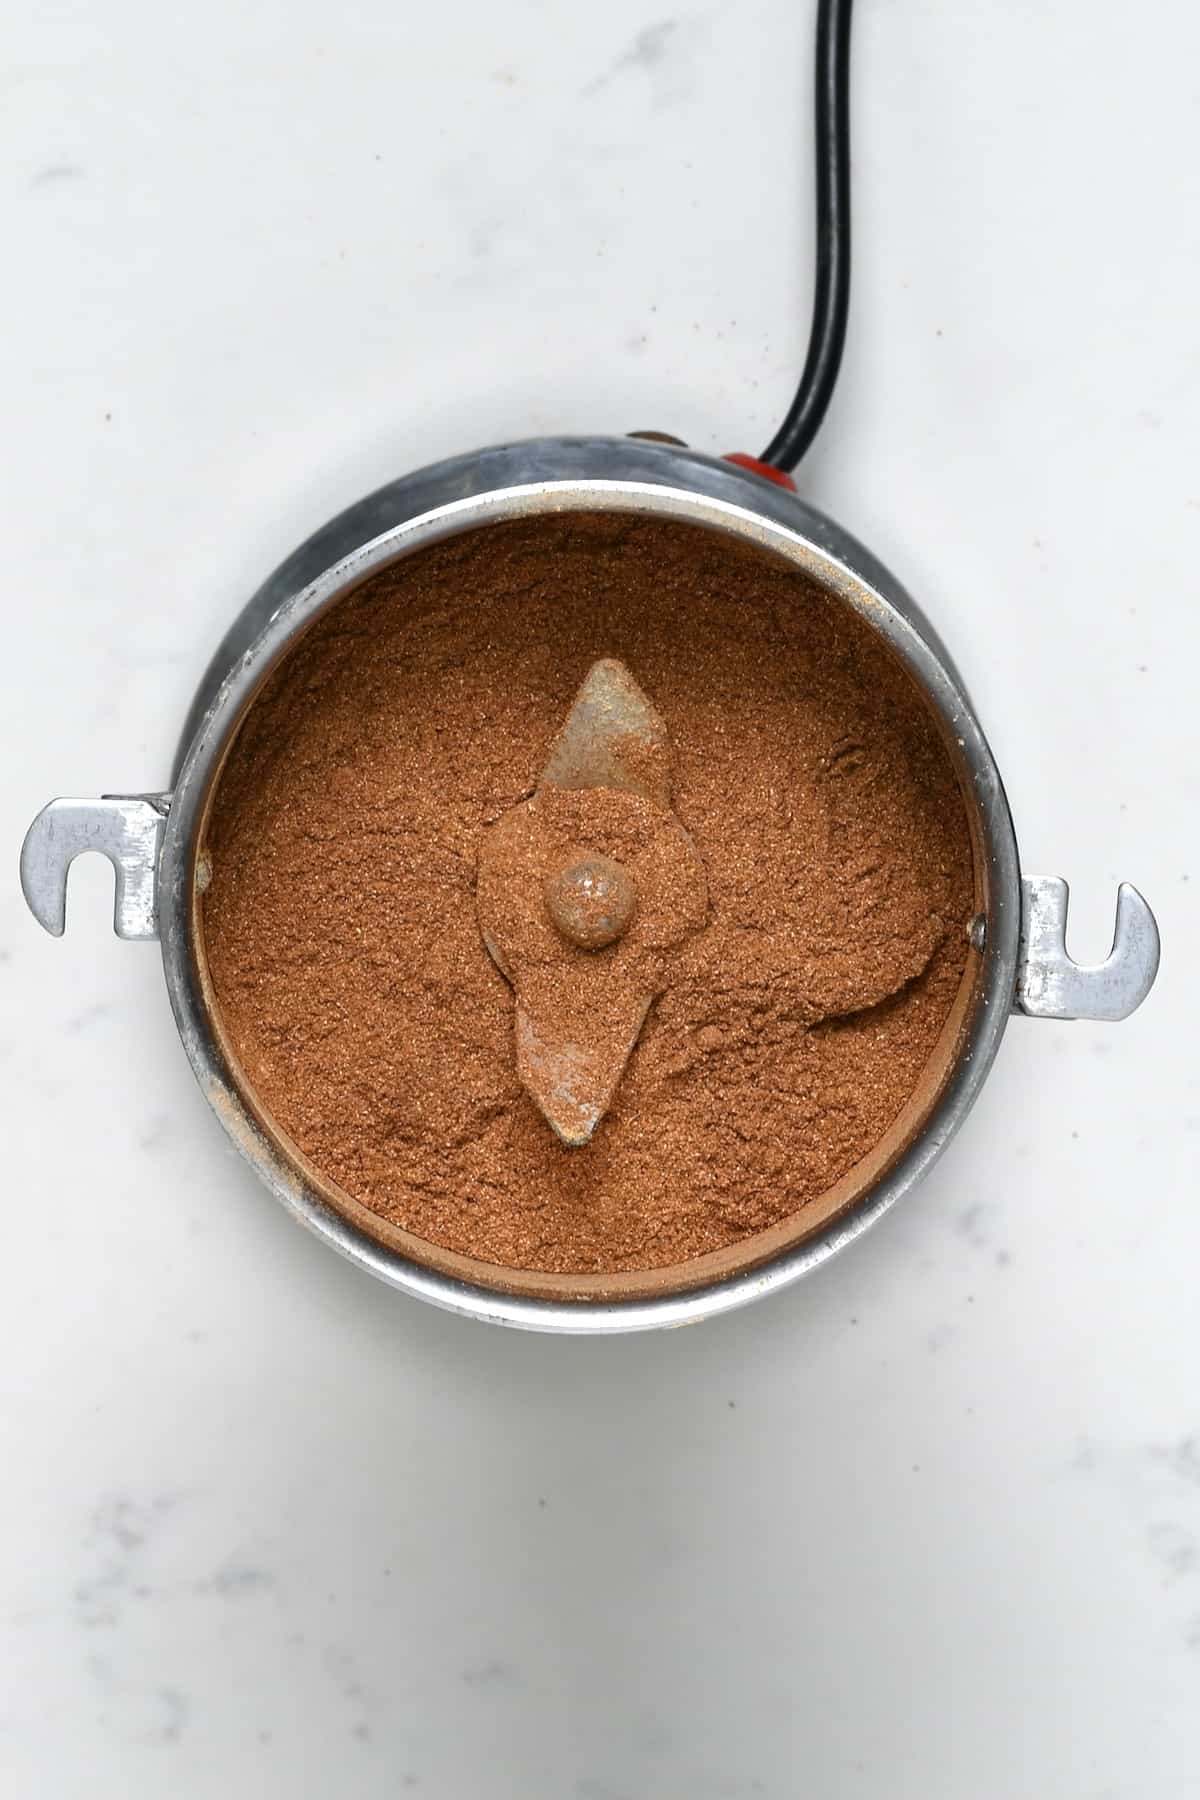 Homemade pumpkin spice mix in a grinder